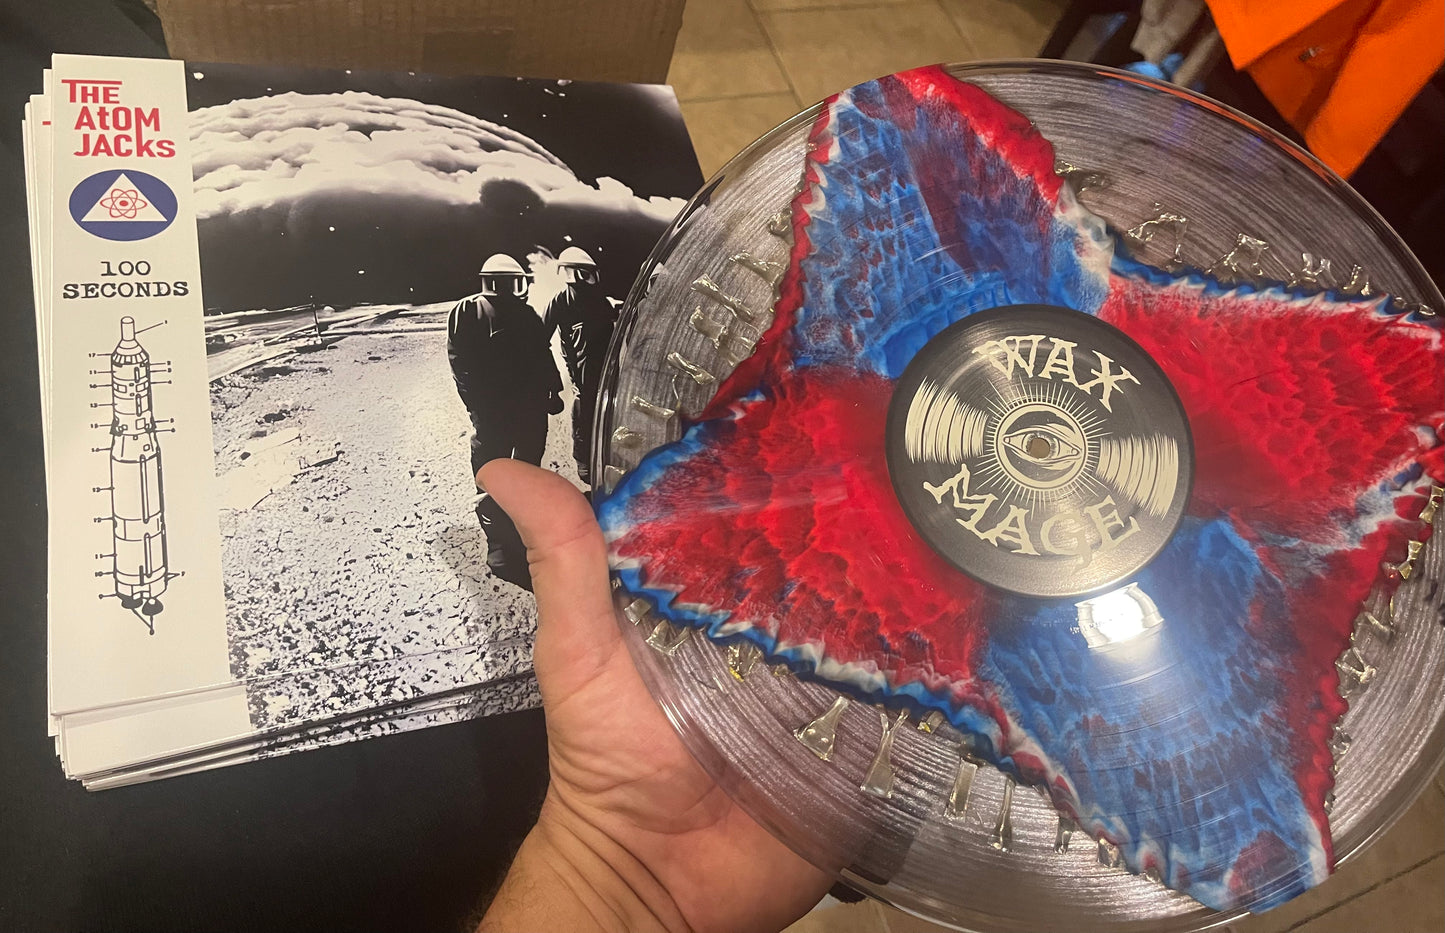 OMR-078 The Atom Jacks “100 Seconds” CD/ Vinyl/Wax Mage